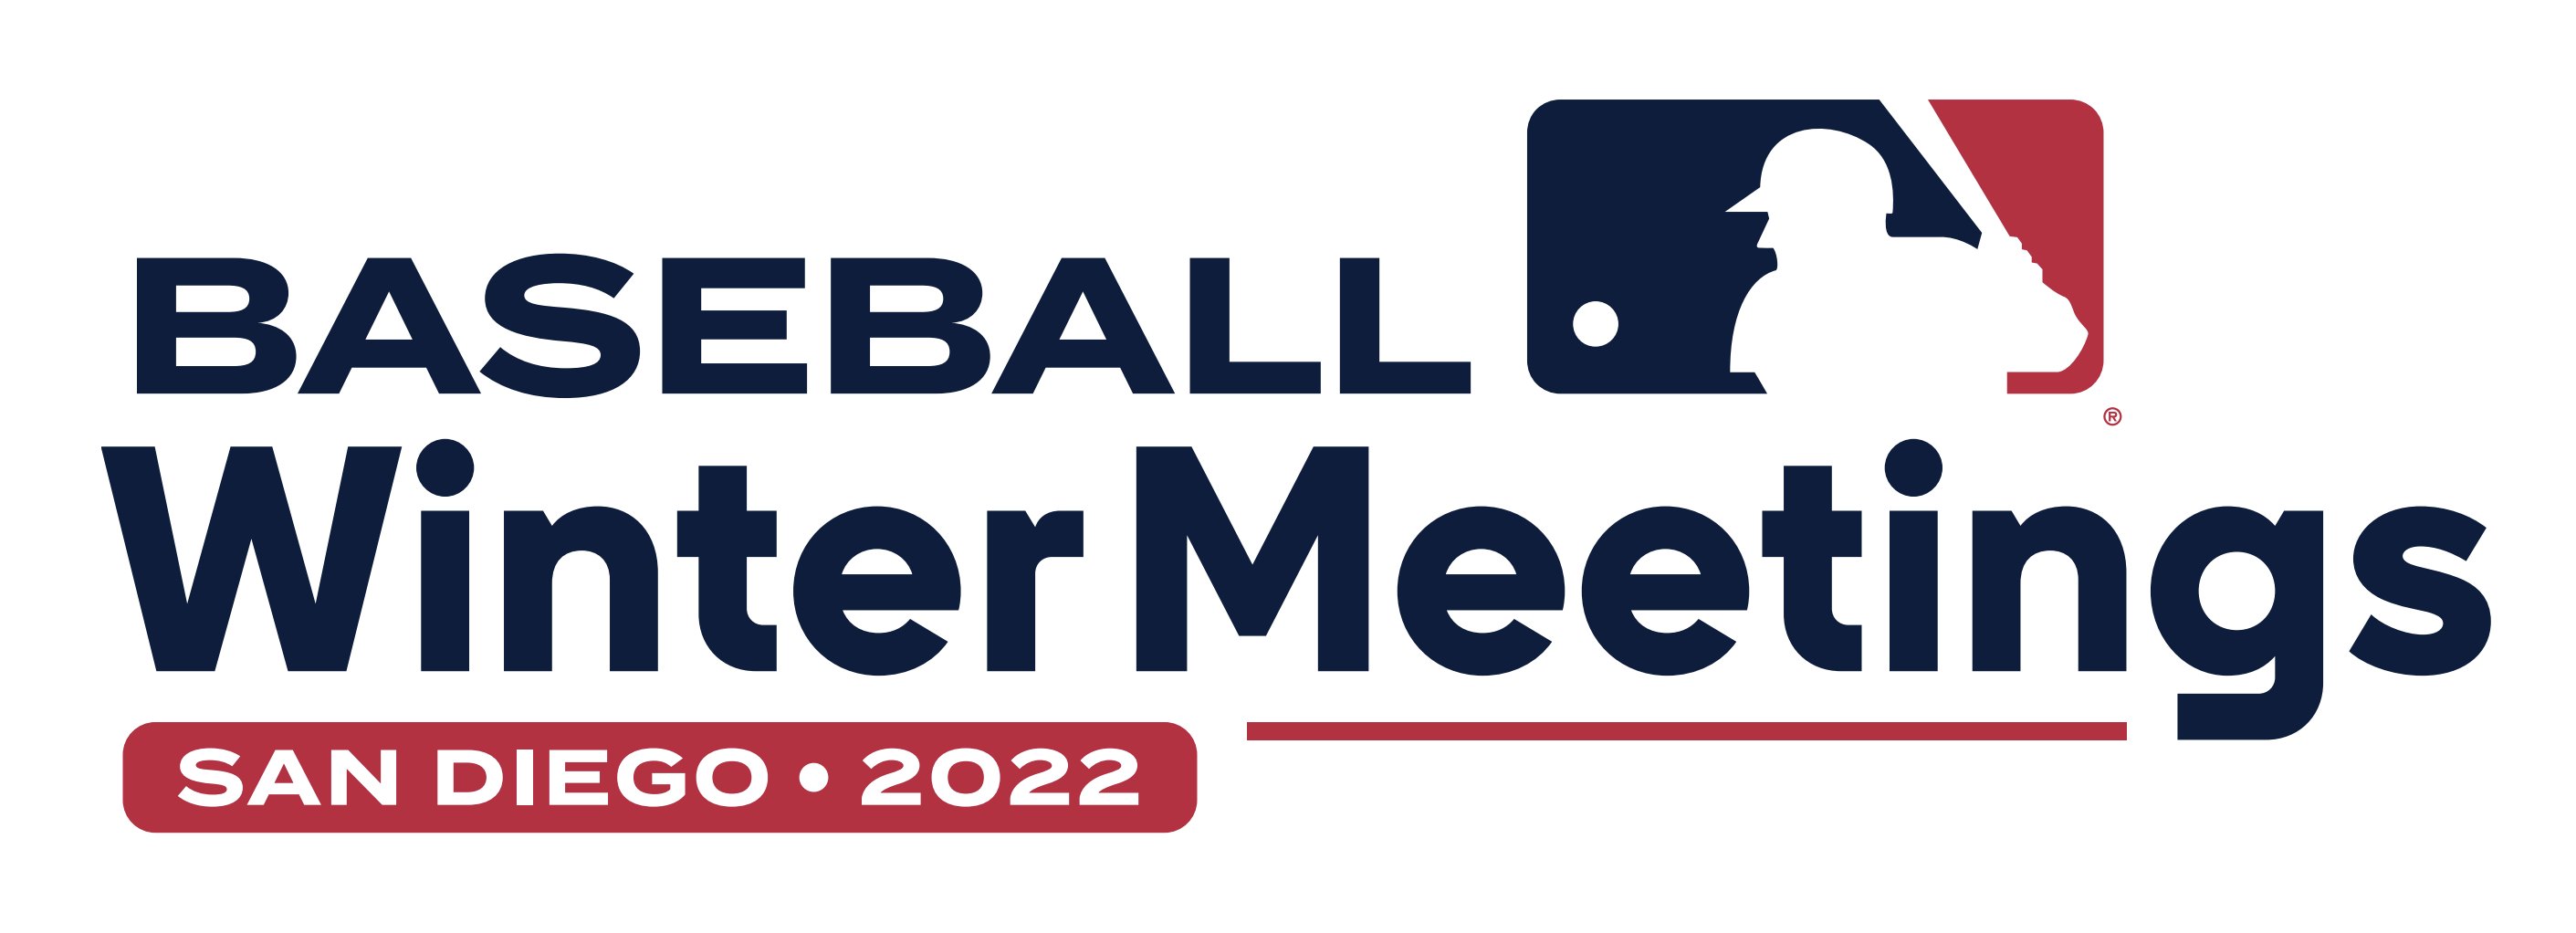 Chris Creamer on Twitter: "The logo for next week's 2022 MLB Winter being held in San Diego #MLB #WinterMeetings https://t.co/hMkIf4qRGz" /